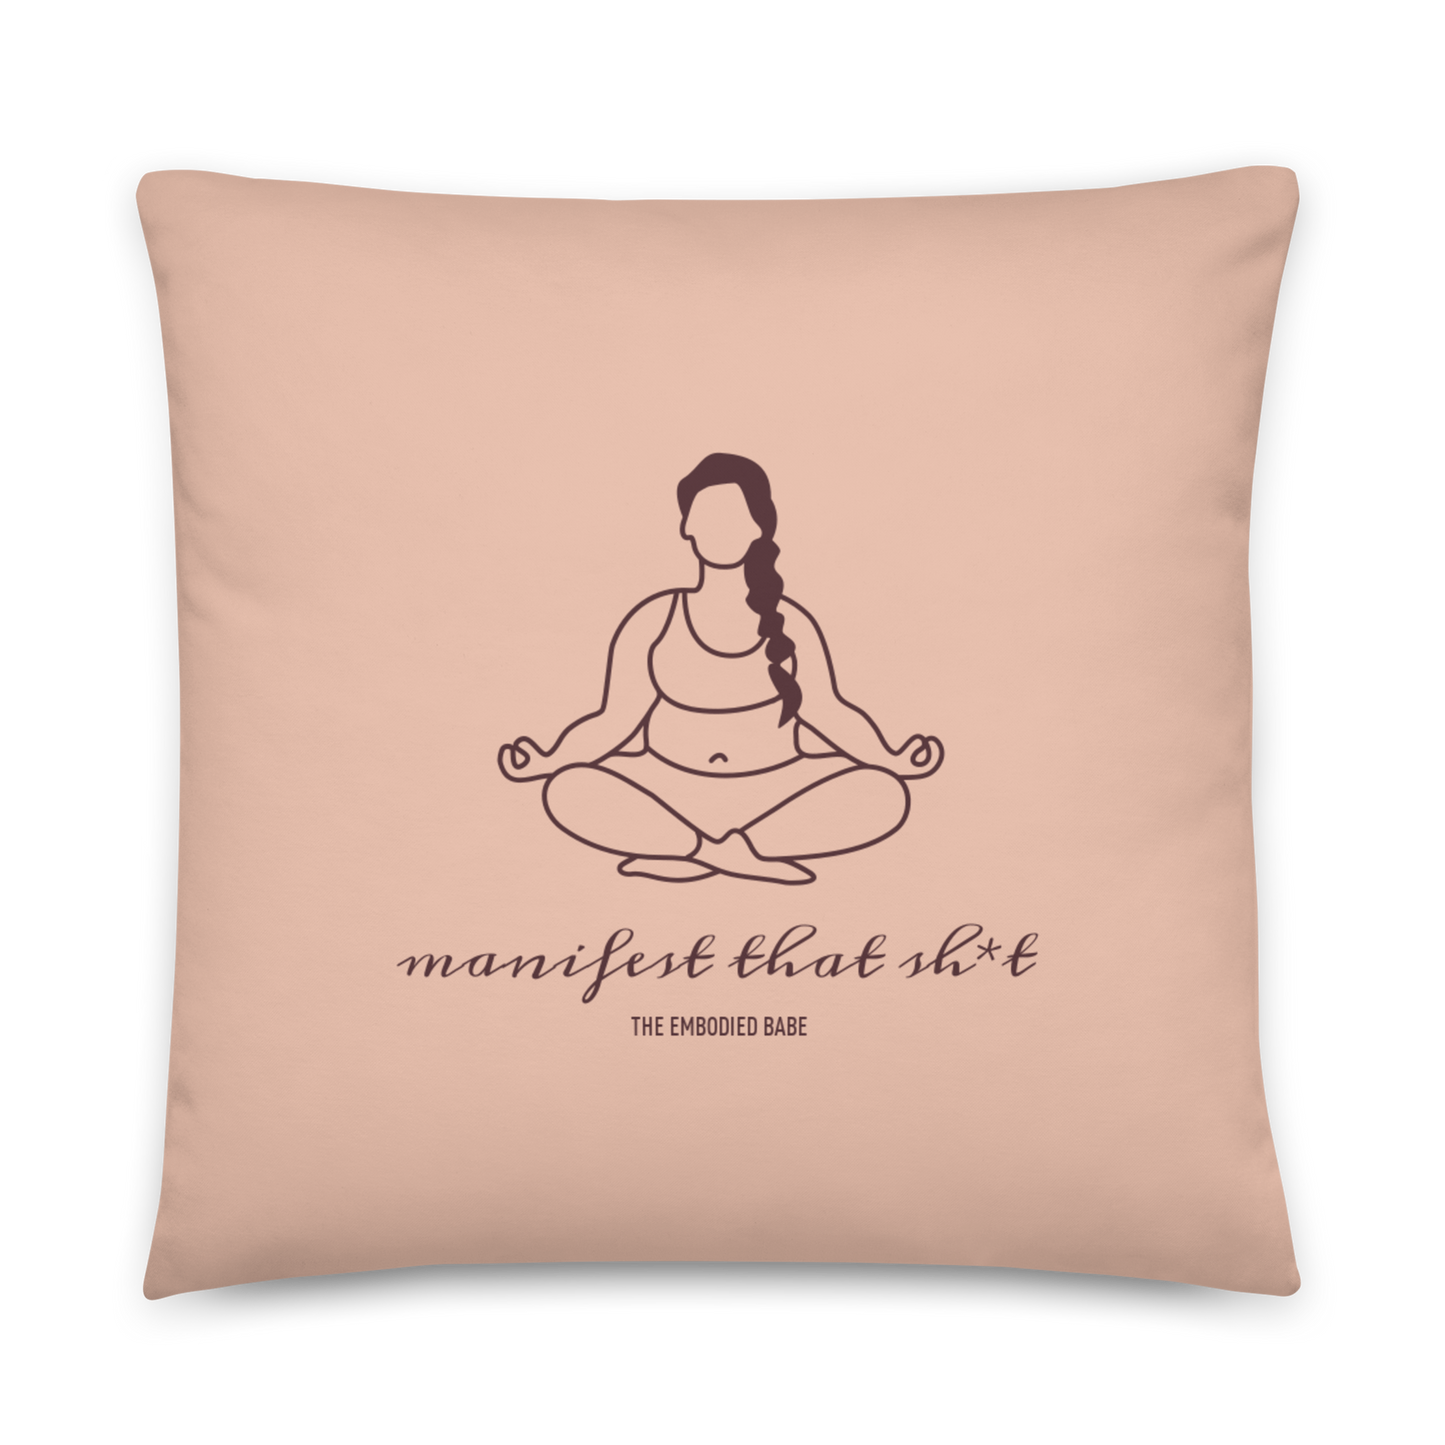 Lana Manifest Pillow